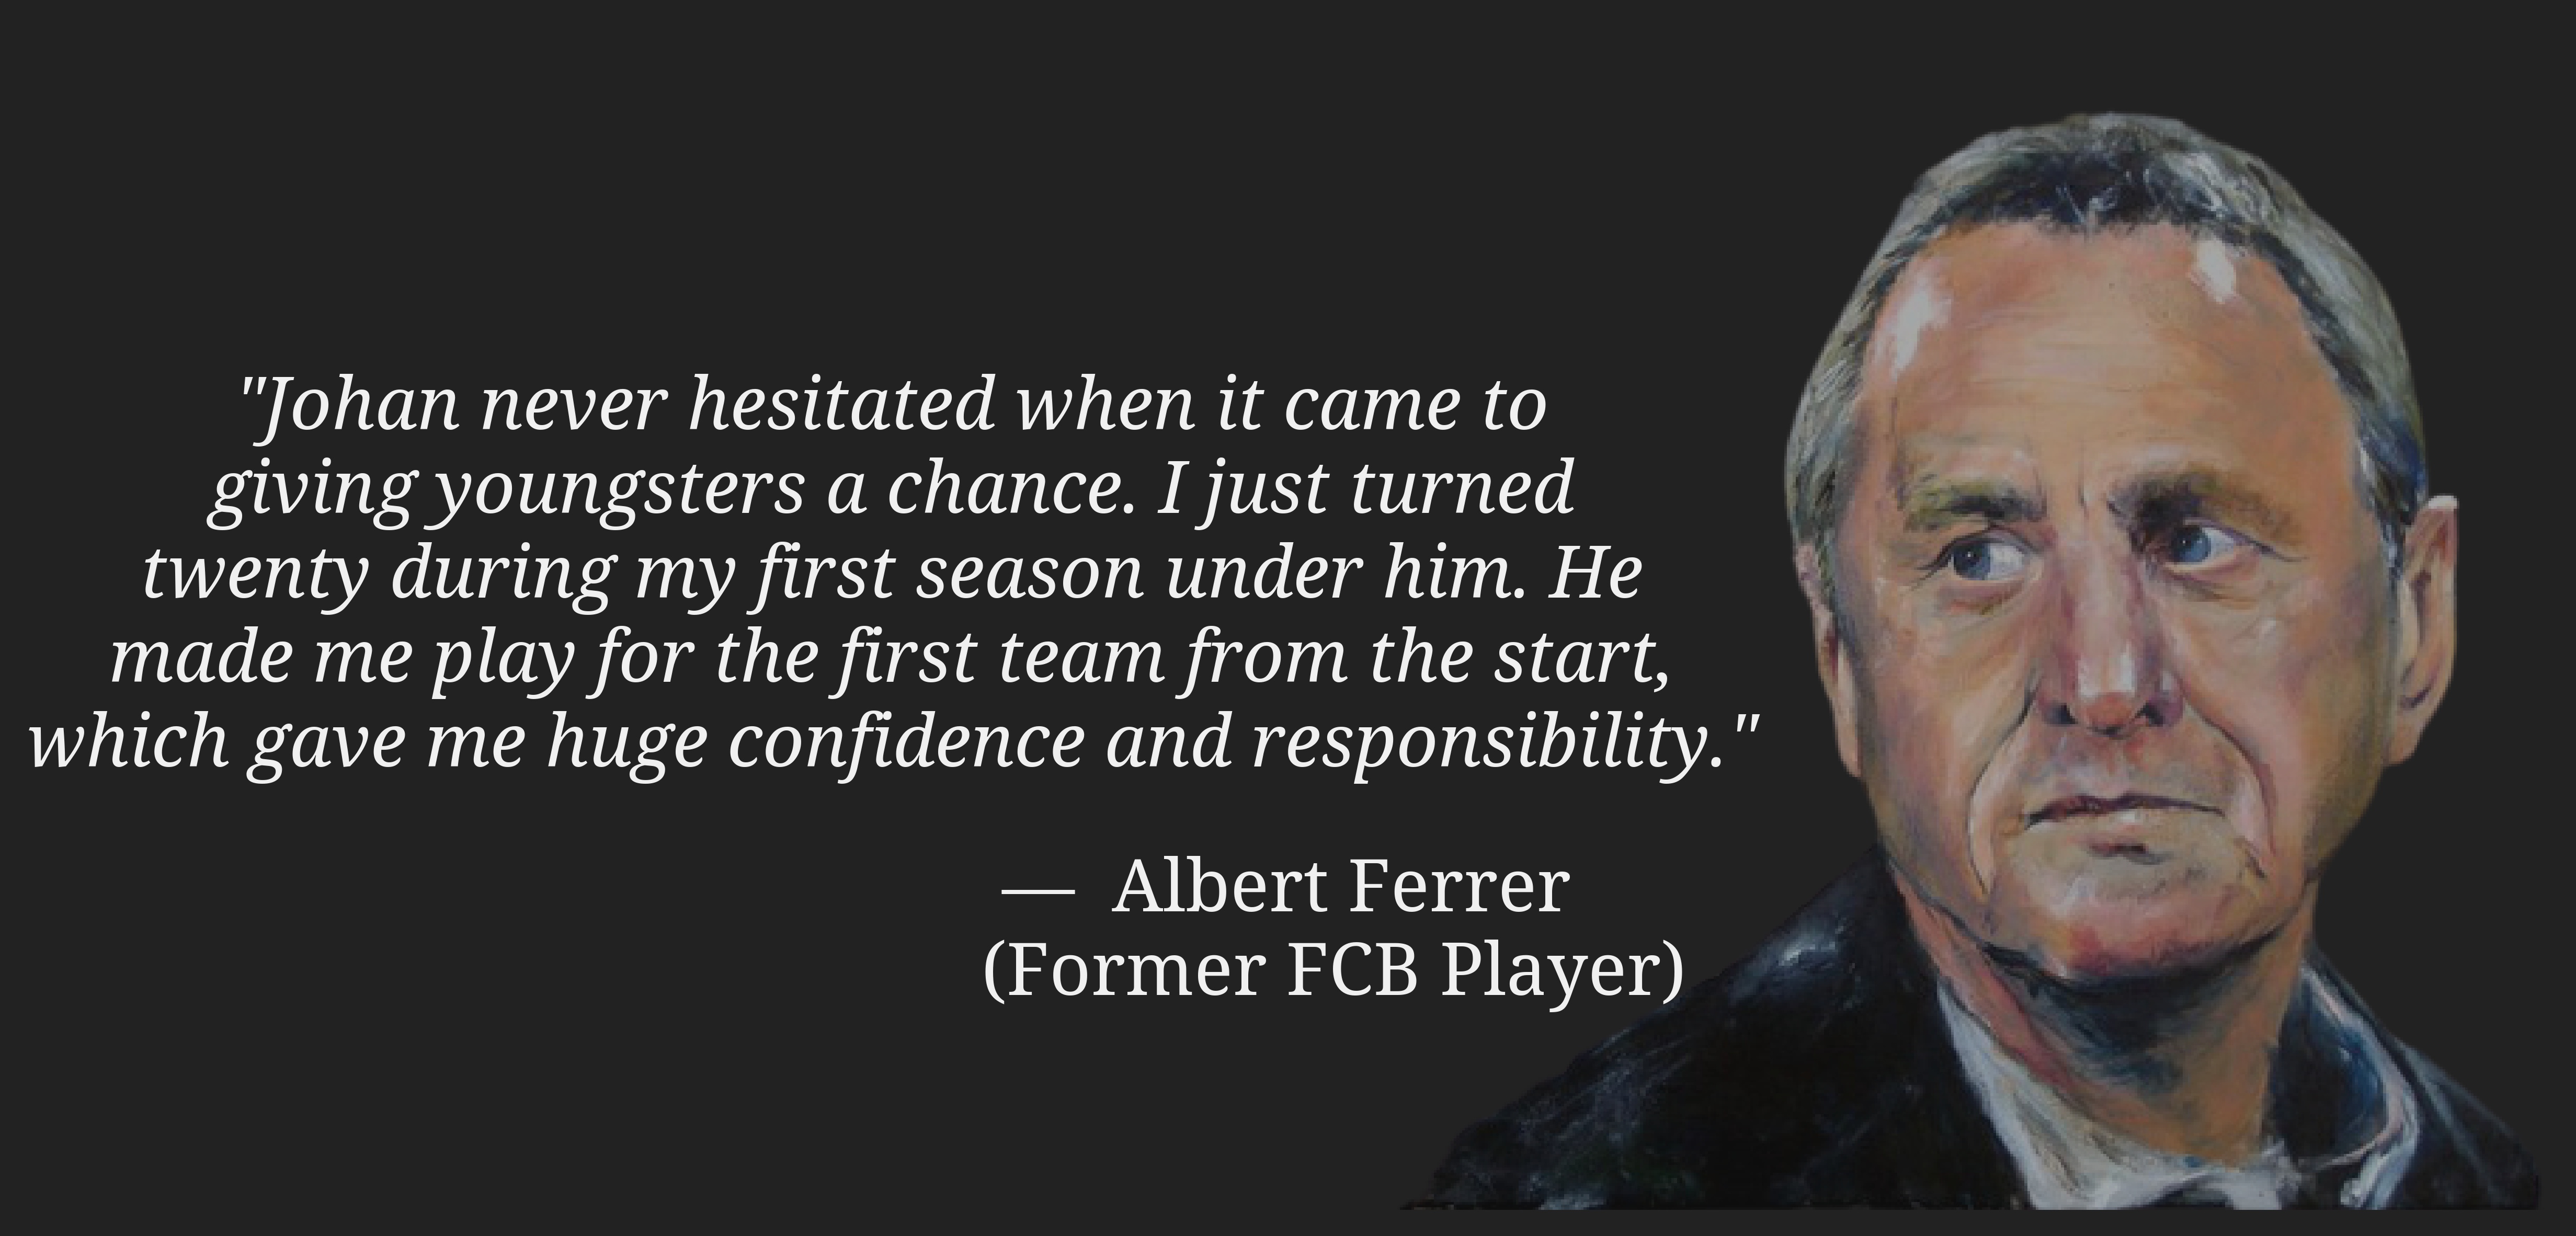 The Legacy of Johan Cruyff